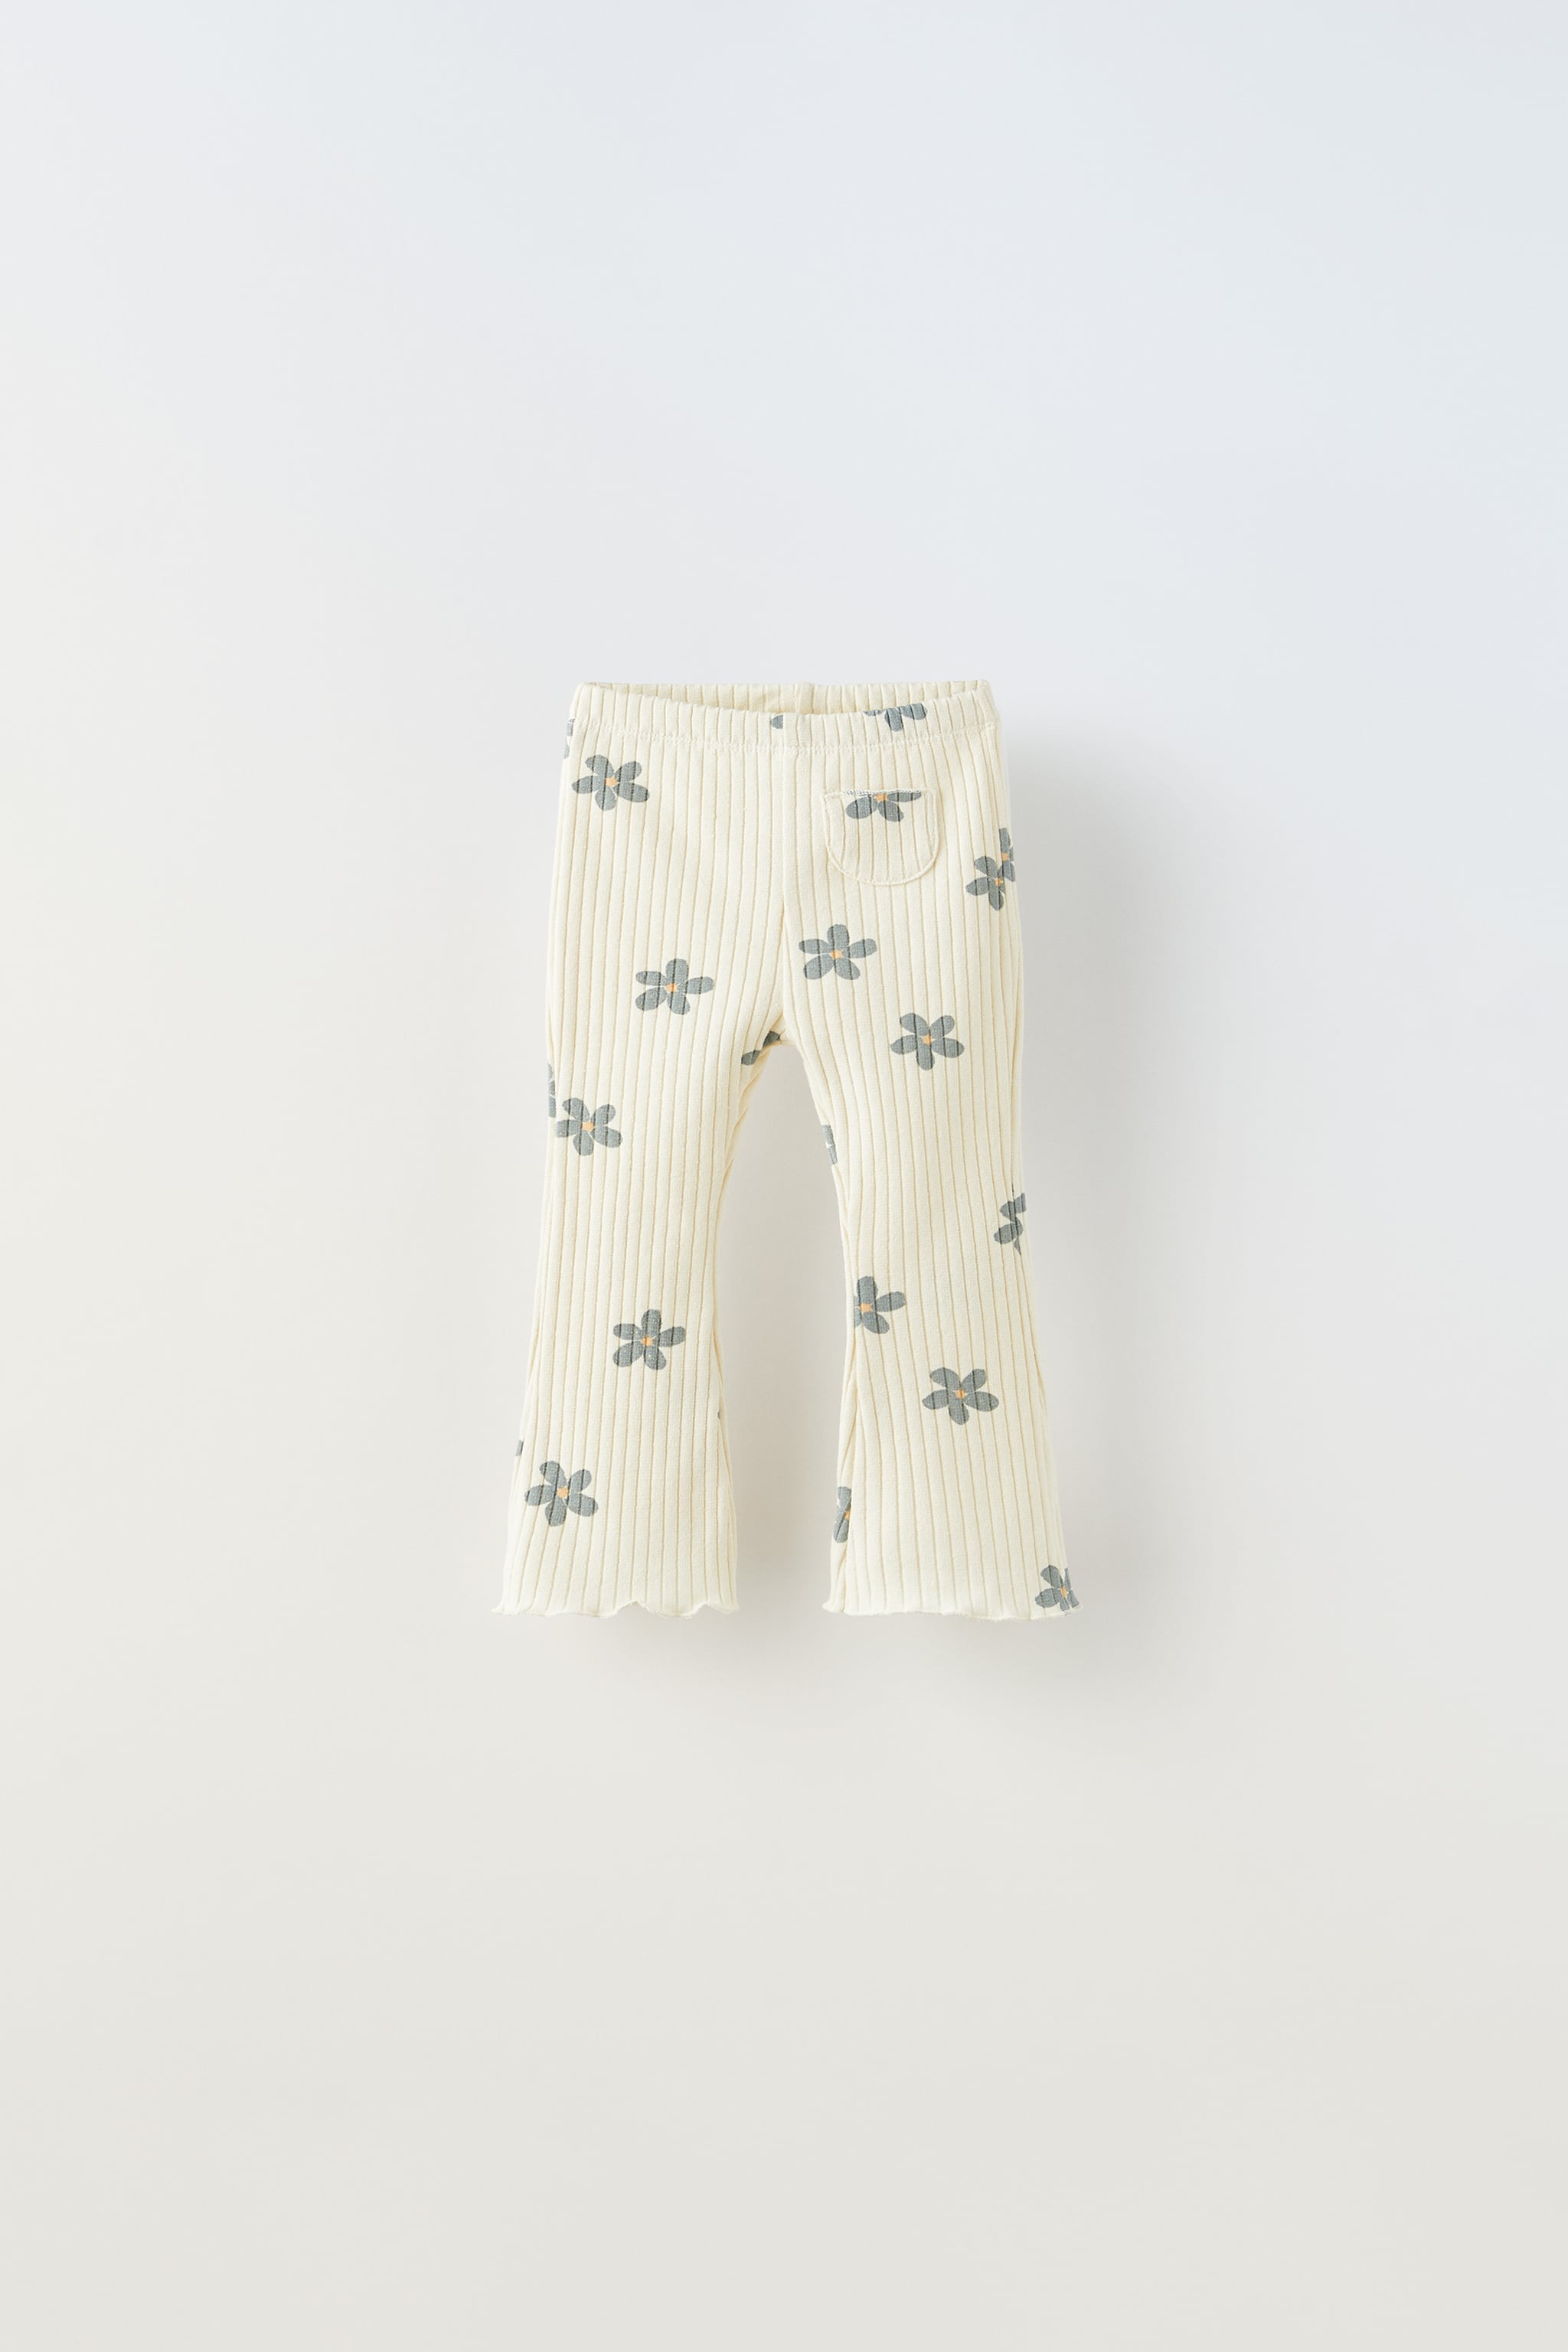 Zara FLORAL FLARED PANTS